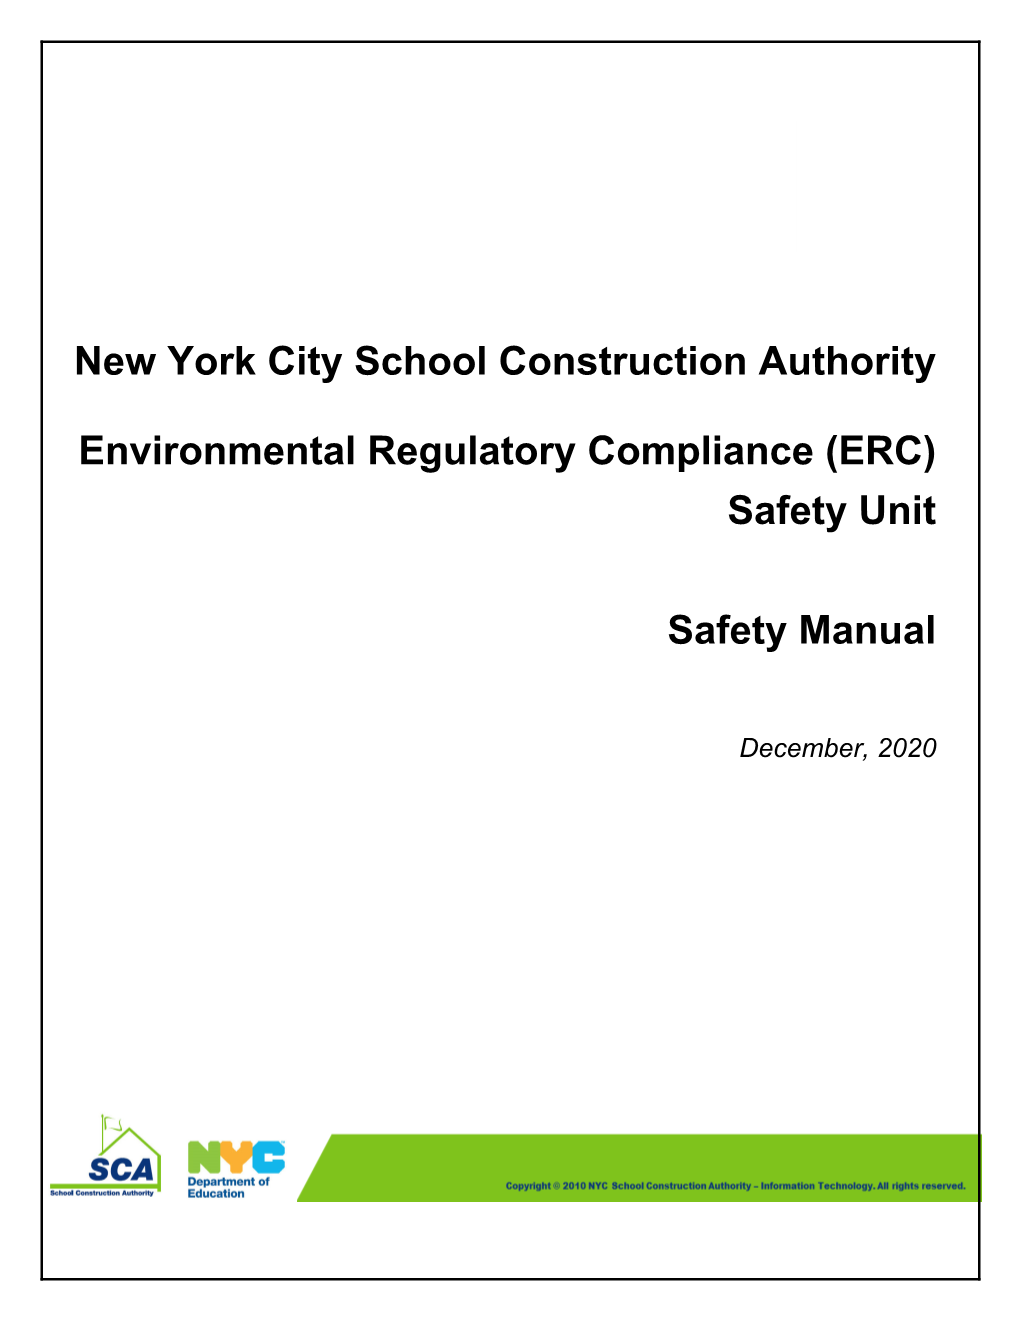 New York City School Construction Authority Environmental Regulatory Compliance (ERC) Safety Unit Safety Manual